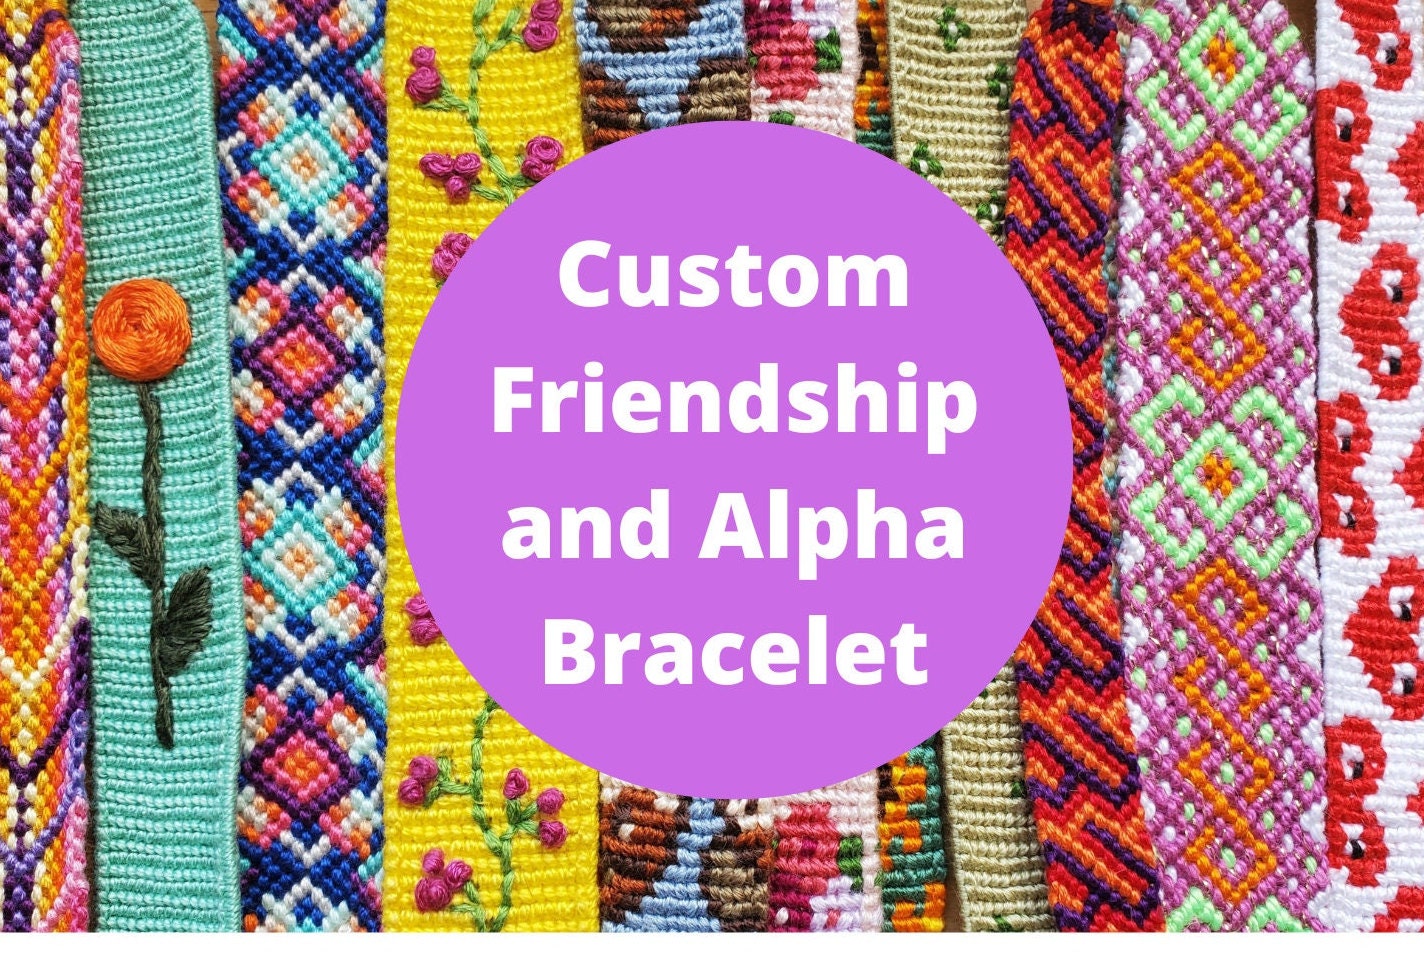 Custom Friendship Bracelet, 58% OFF | ekosplay.com